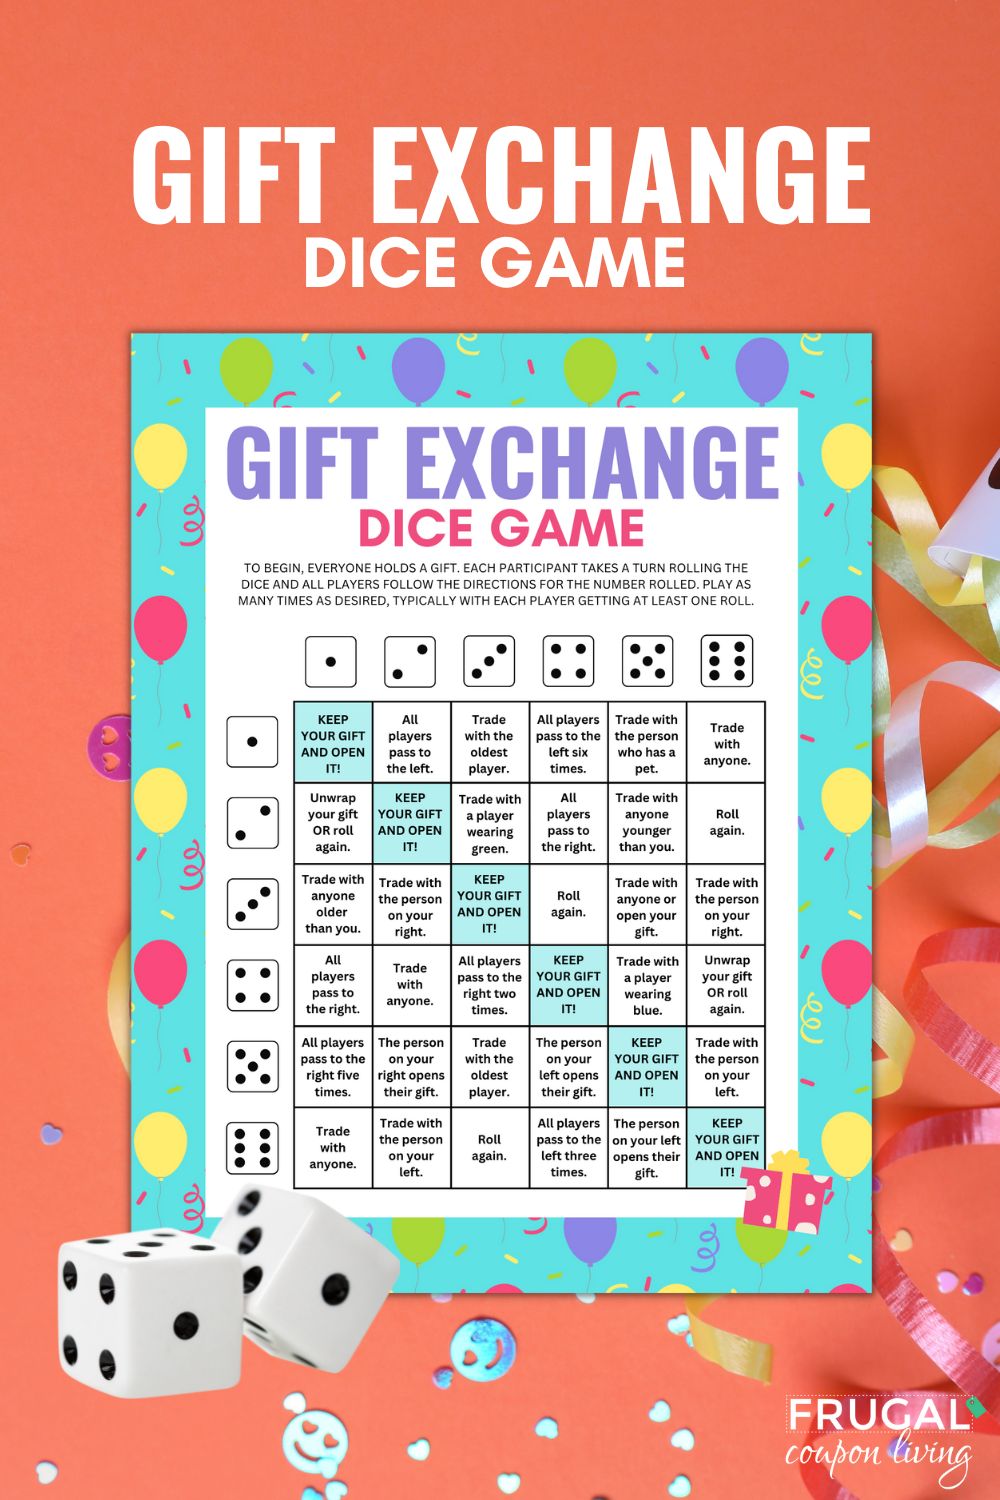 Roll the Dice Gift Exchange Printable Virtual White Elephant 